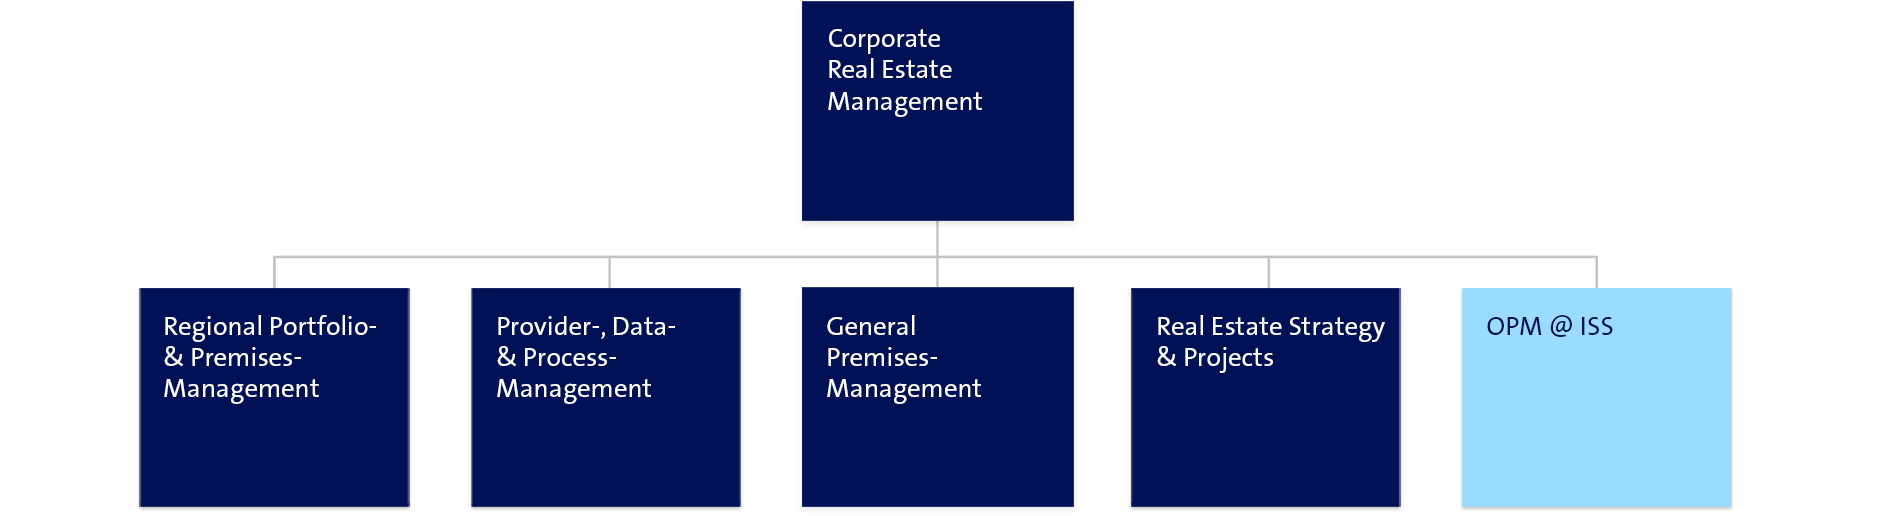 Organisation Corporate Real Estate Management